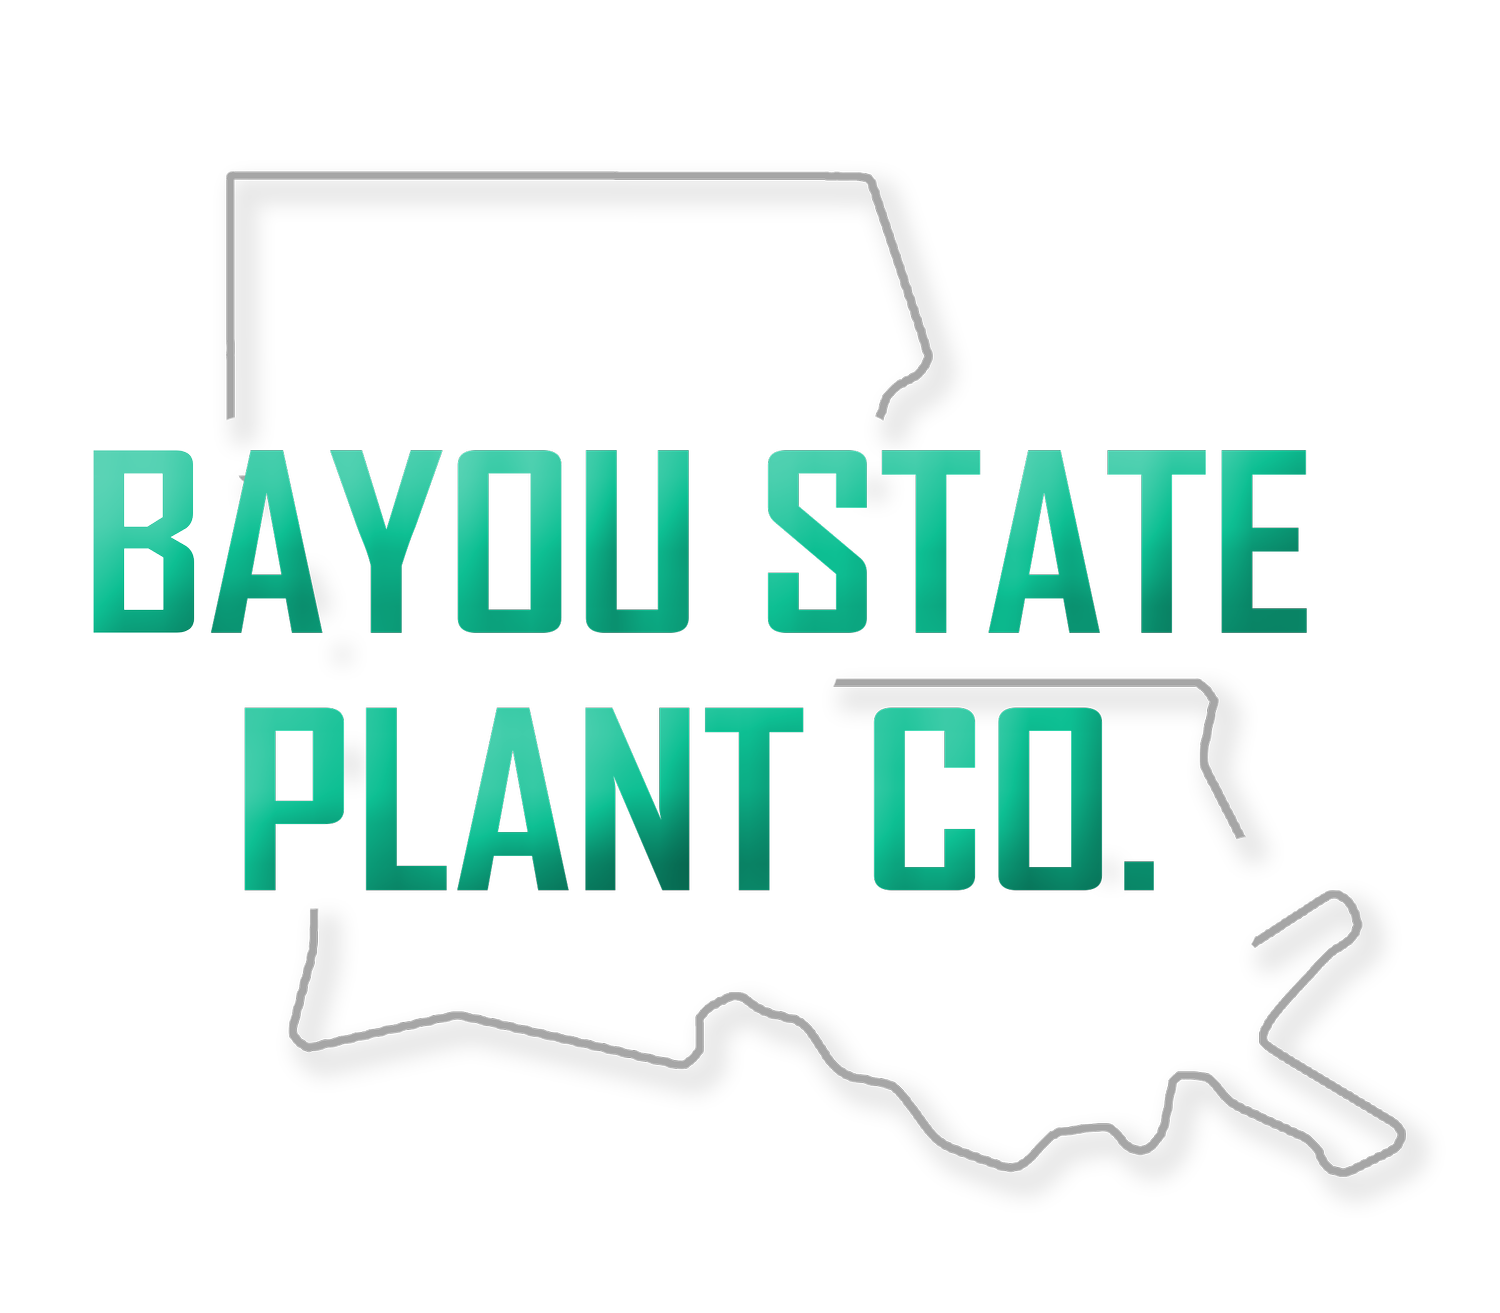 Bayou State Plant Co.